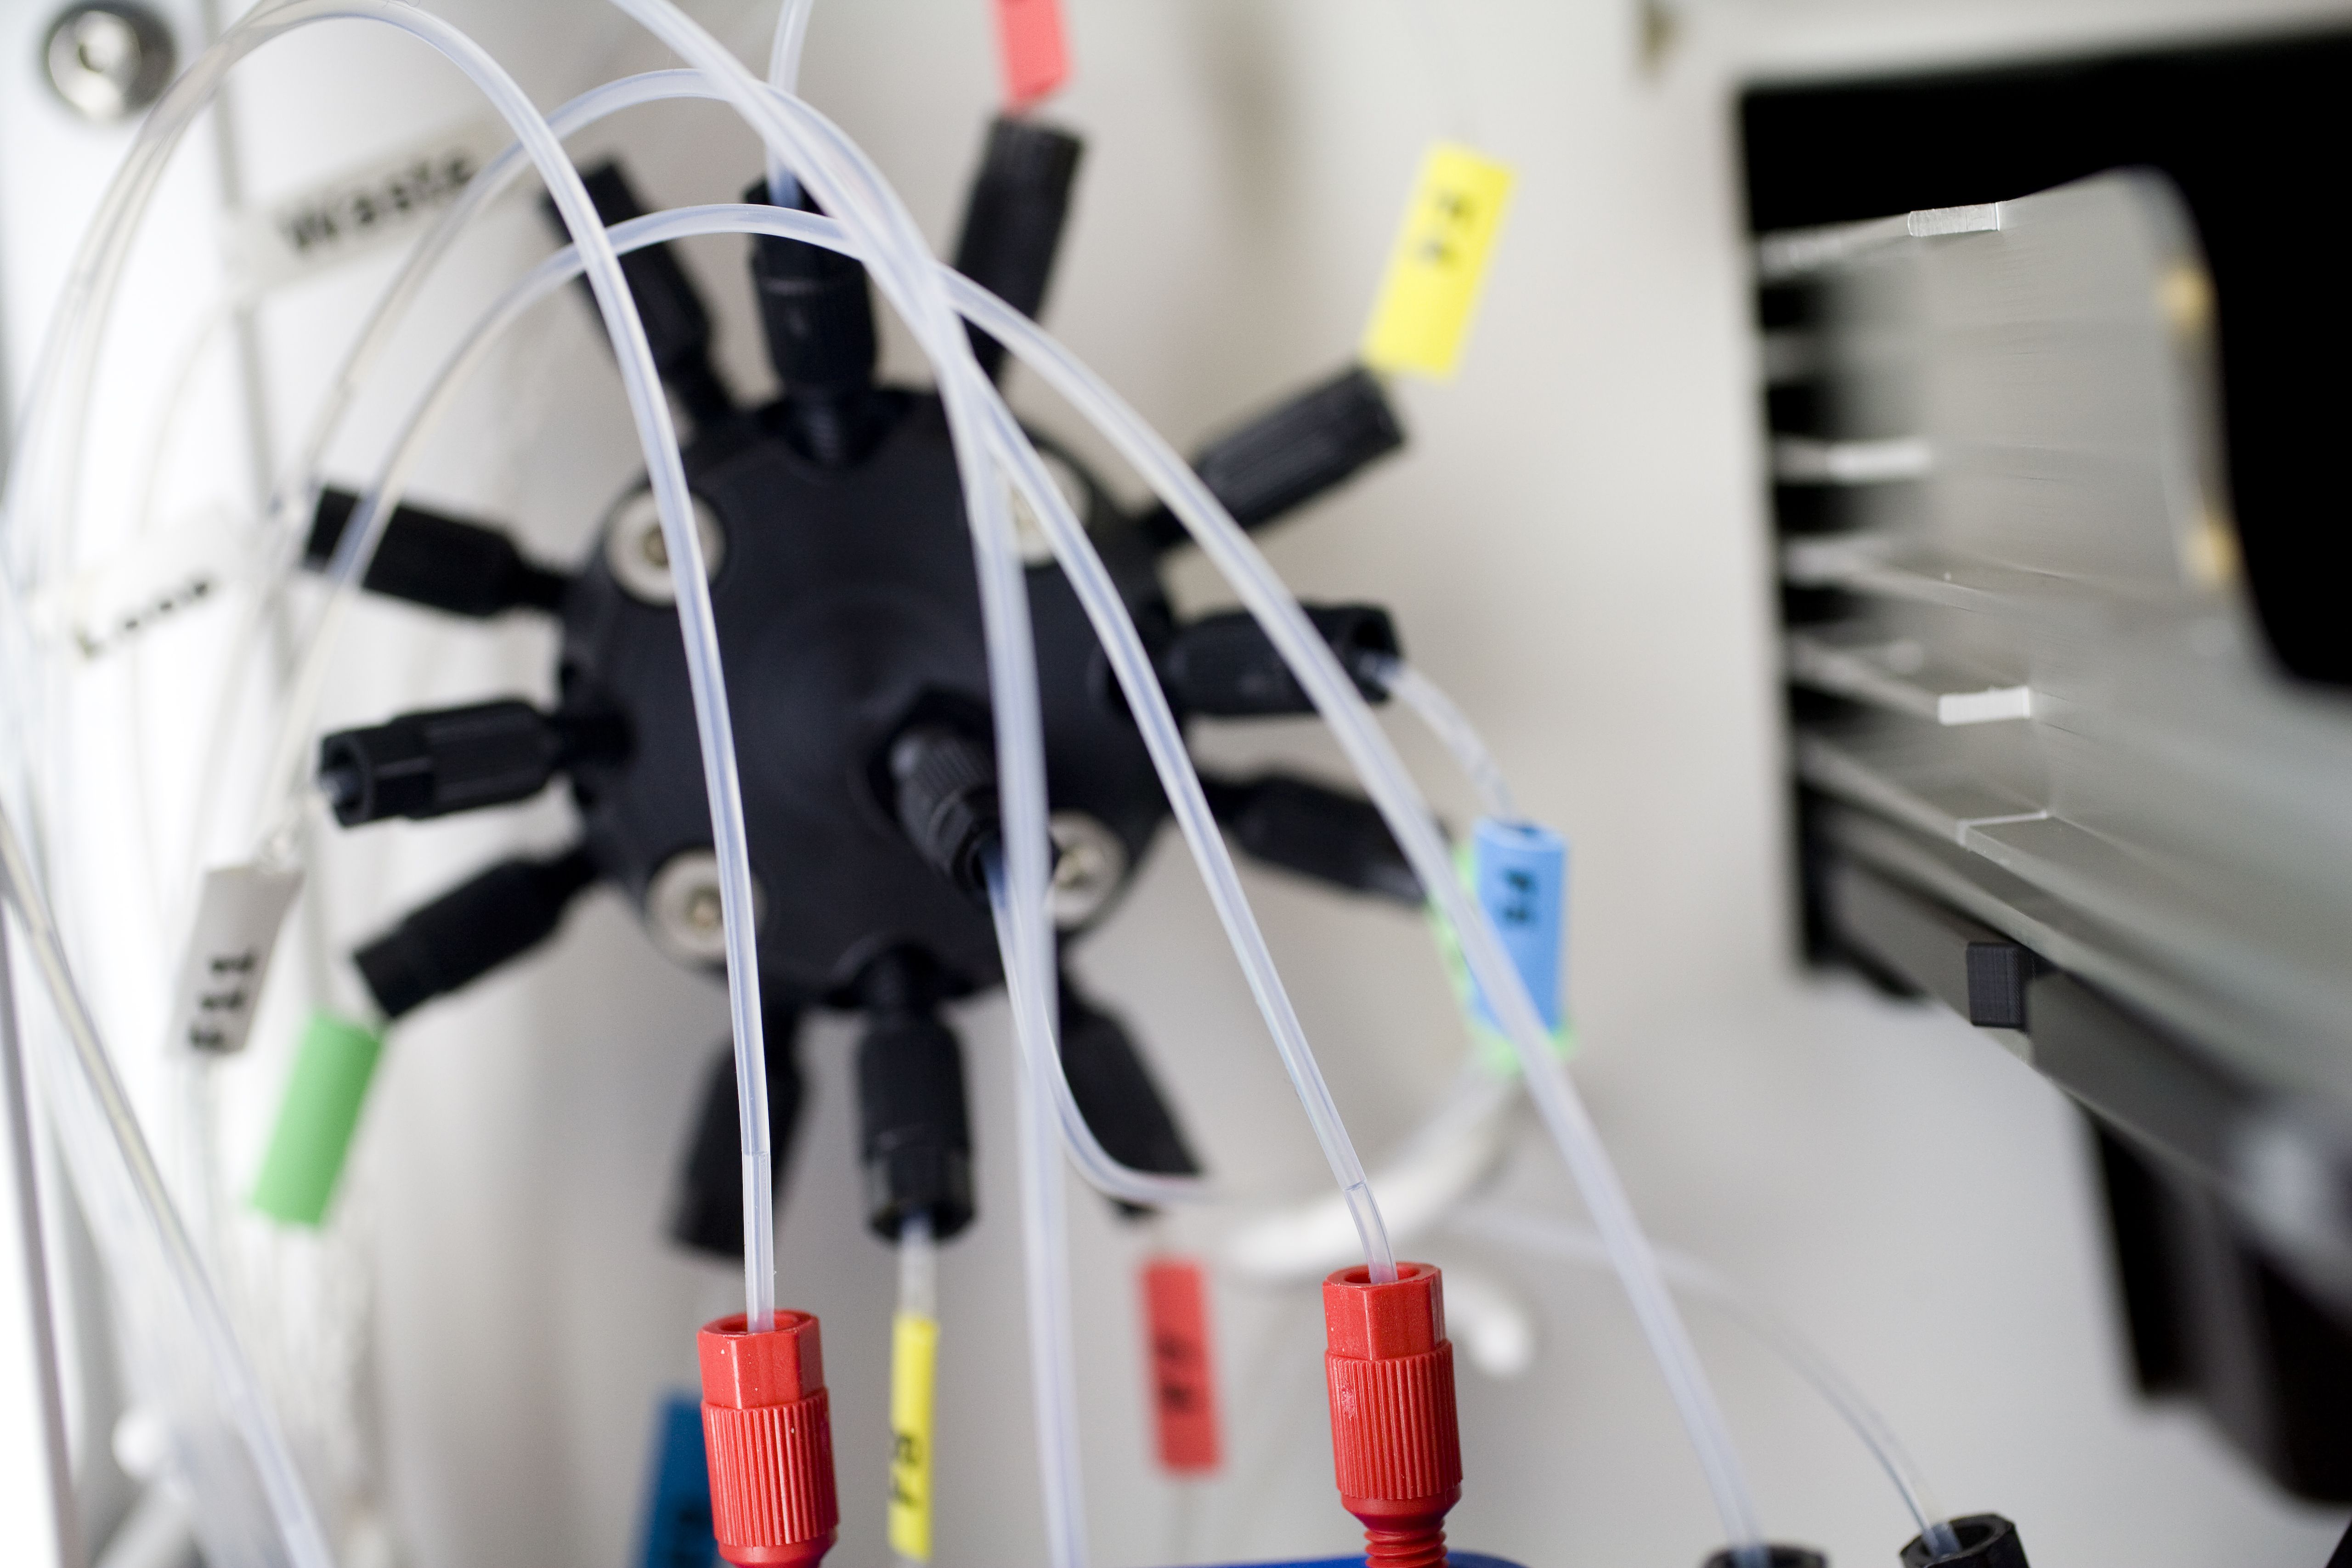 Instrumento científico con tubos transparentes conectados a tornillos rojos